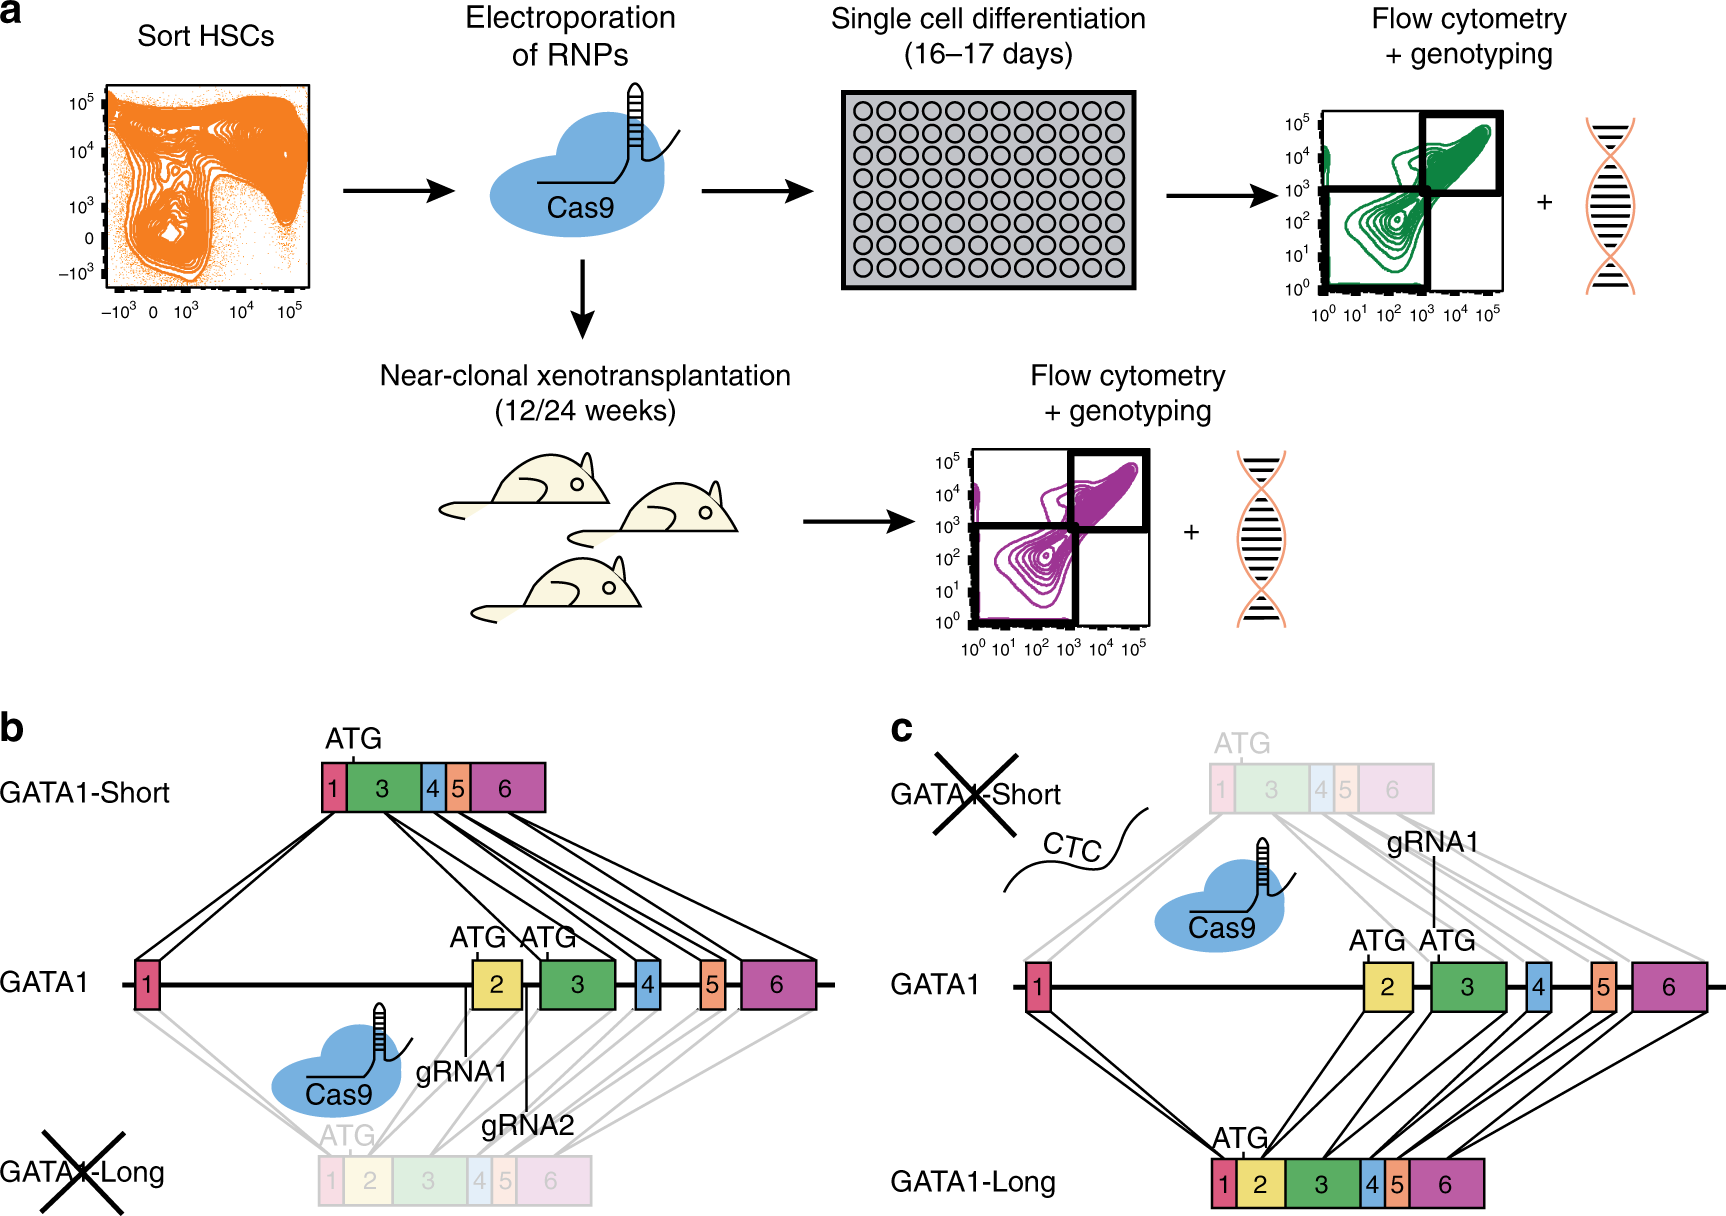 Functional profiling of single CRISPR/Cas9-edited human long-term